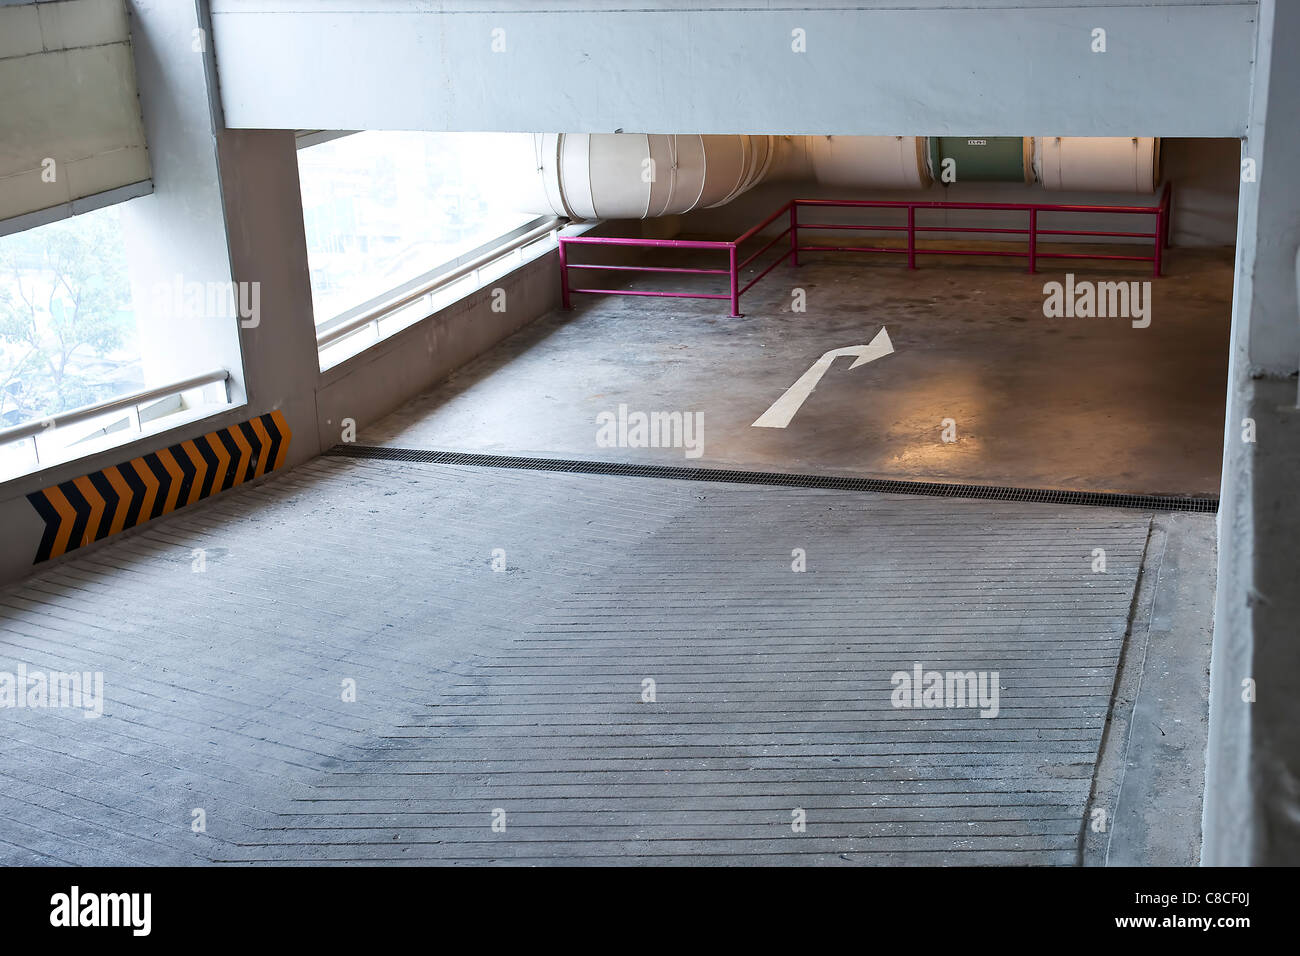 ramp lane from upper floor to lower floor in car parking lot Stock Photo